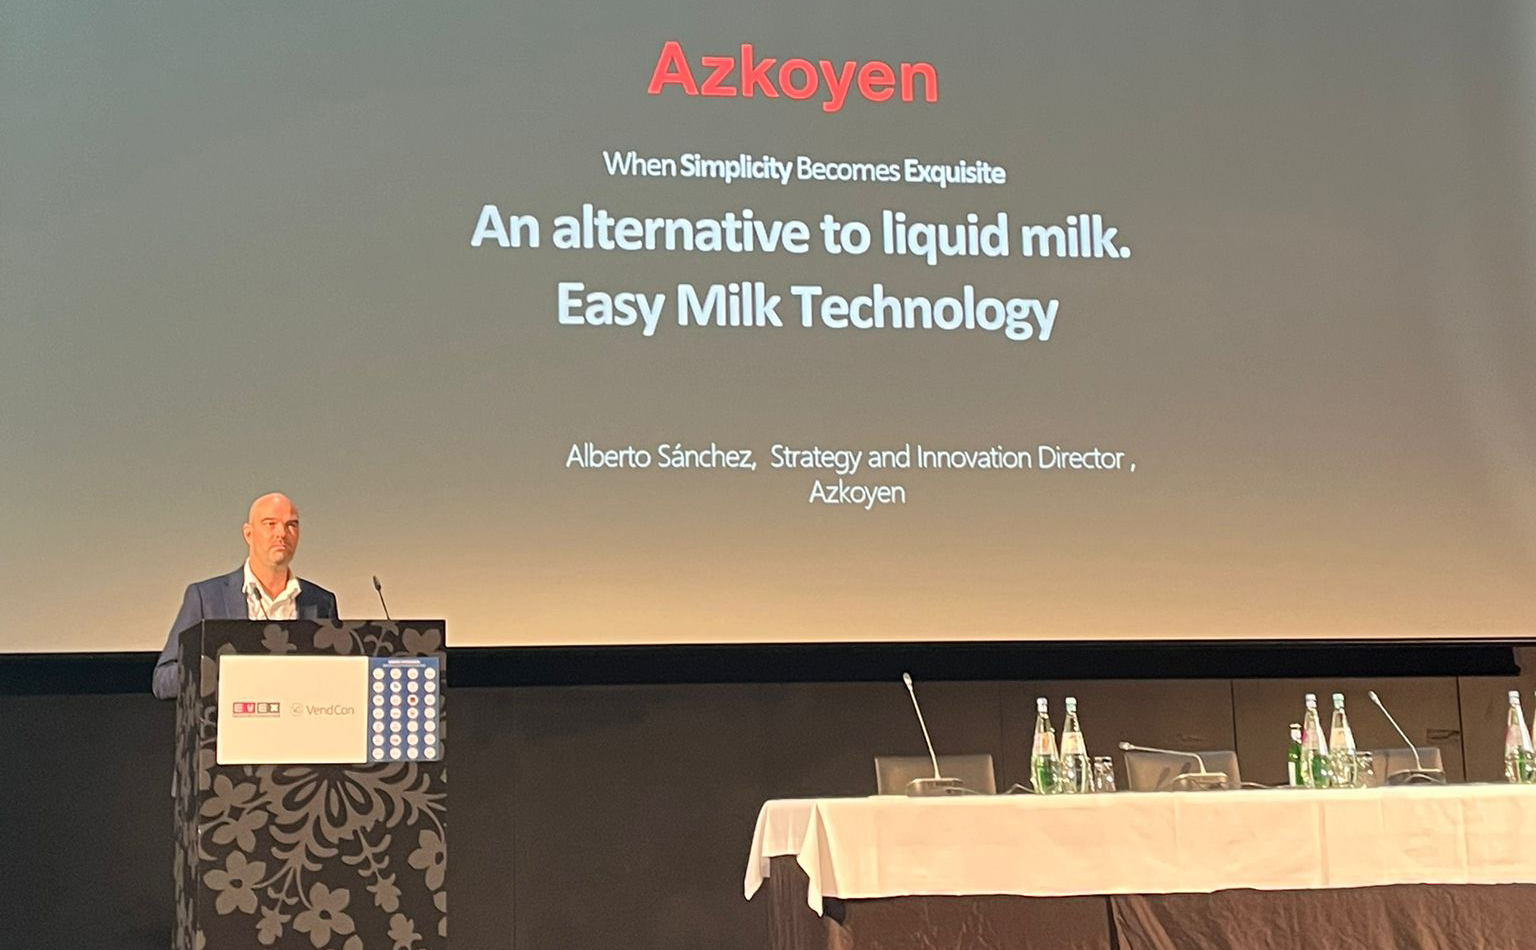 The Azkoyen Group is expanding its new MIA technology throughout Europe